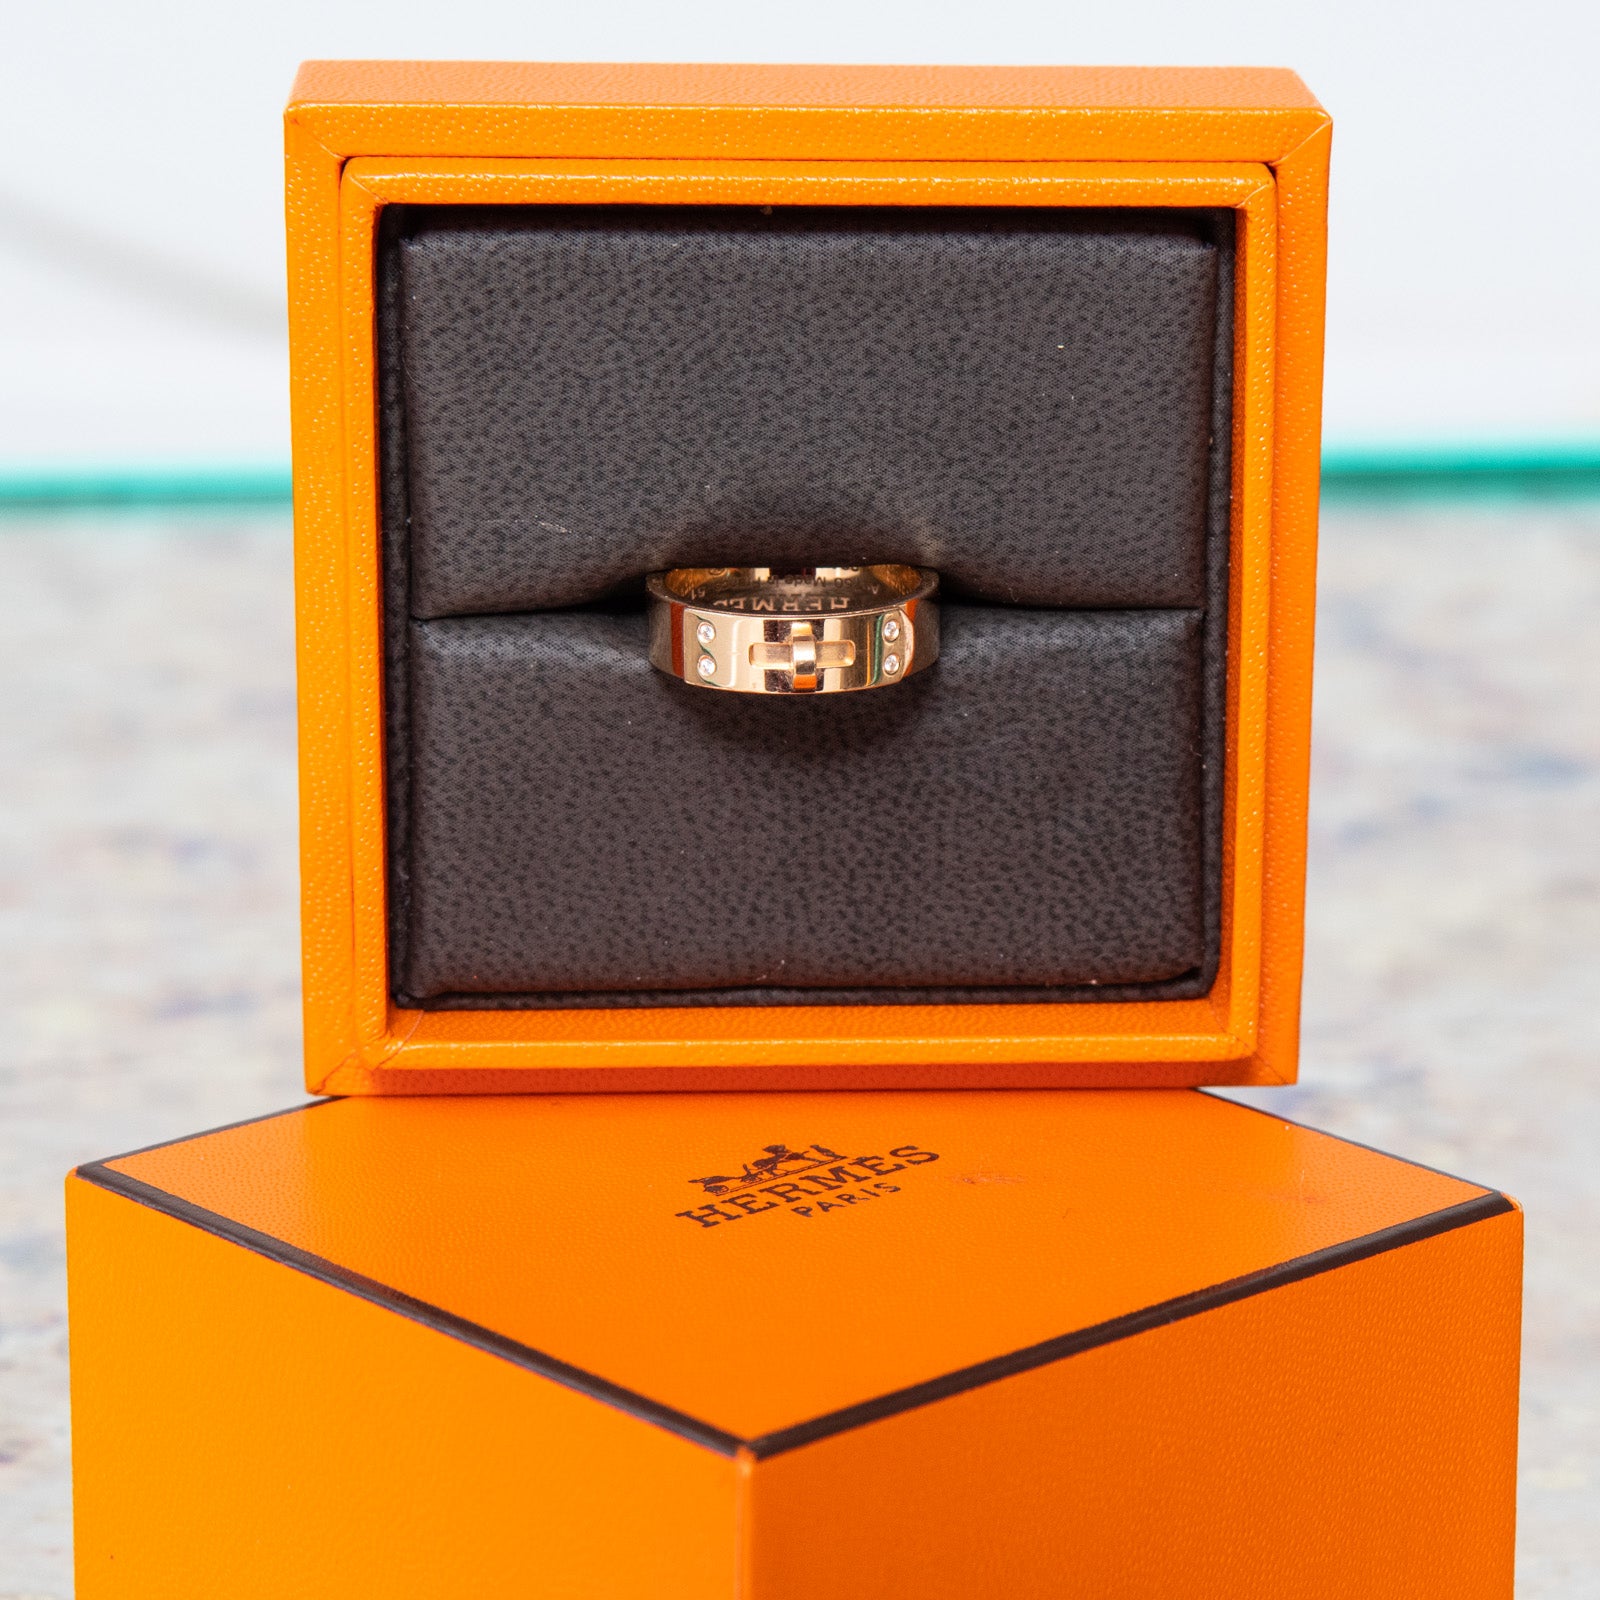 Hermes Rose Gold Kelly Ring Size 51 - Image 7 of 8